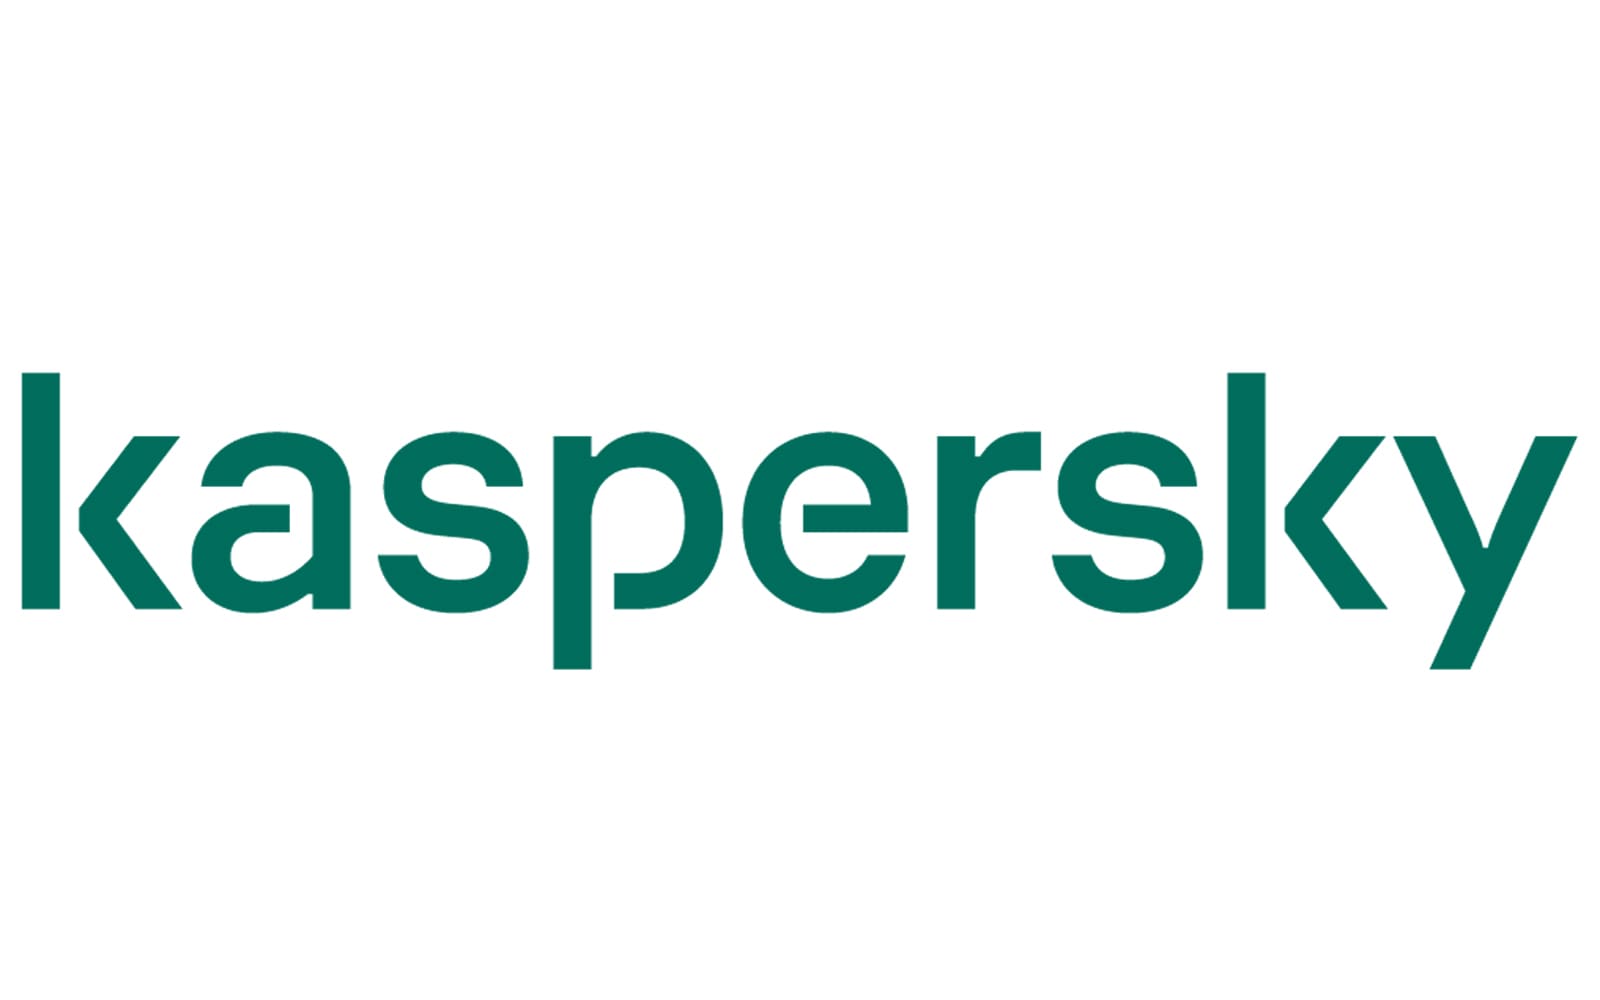 Kaspersky partner